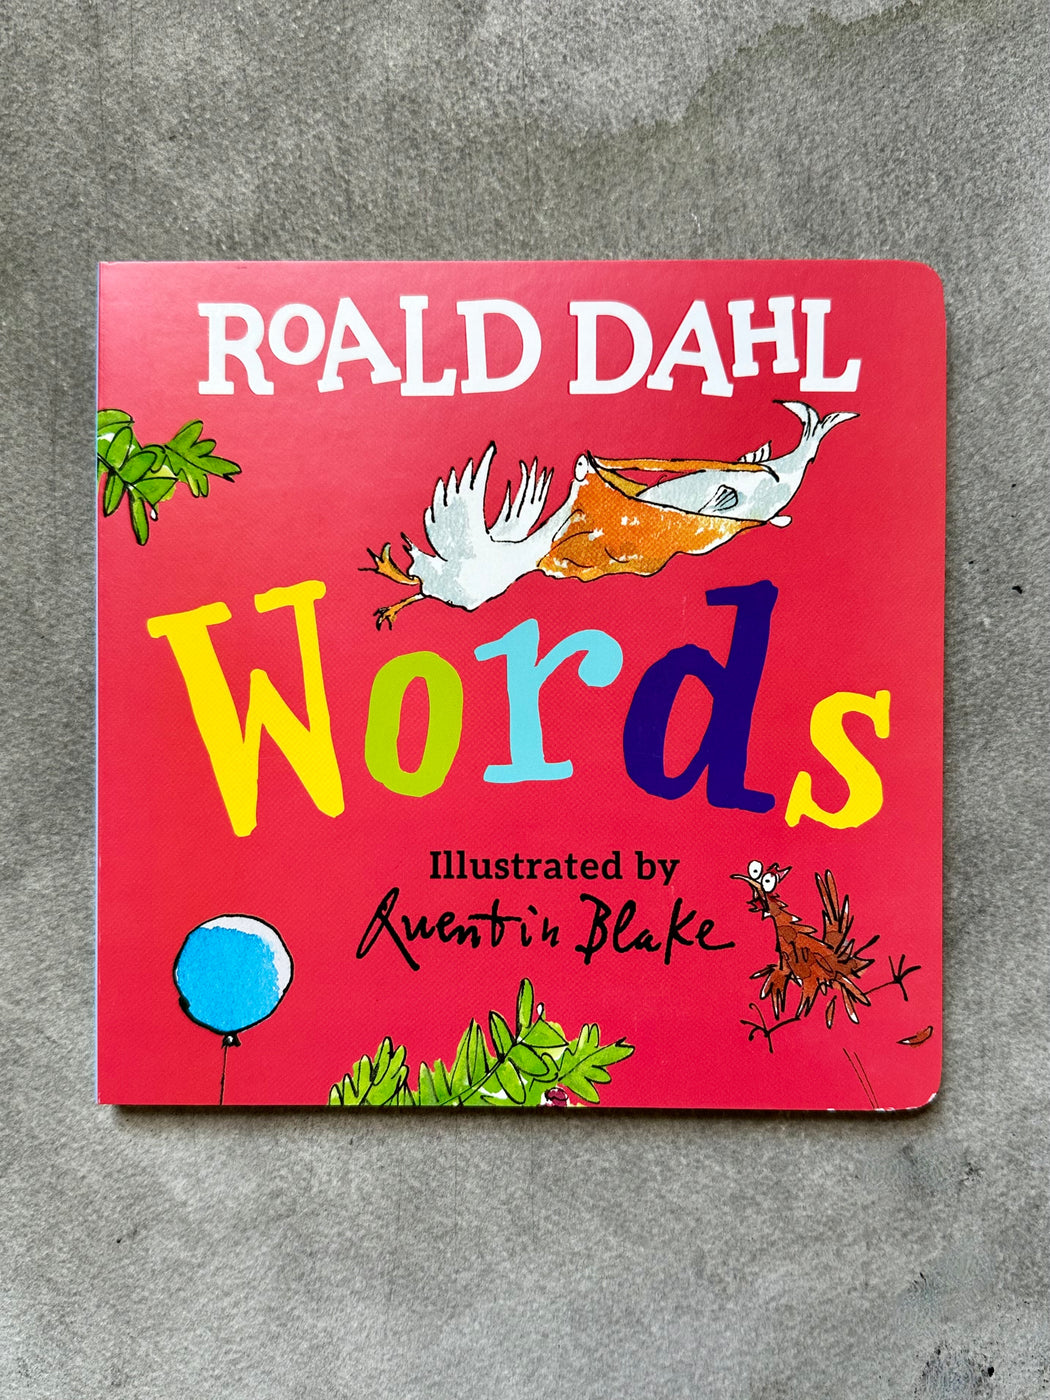 "Words" by Roald Dahl